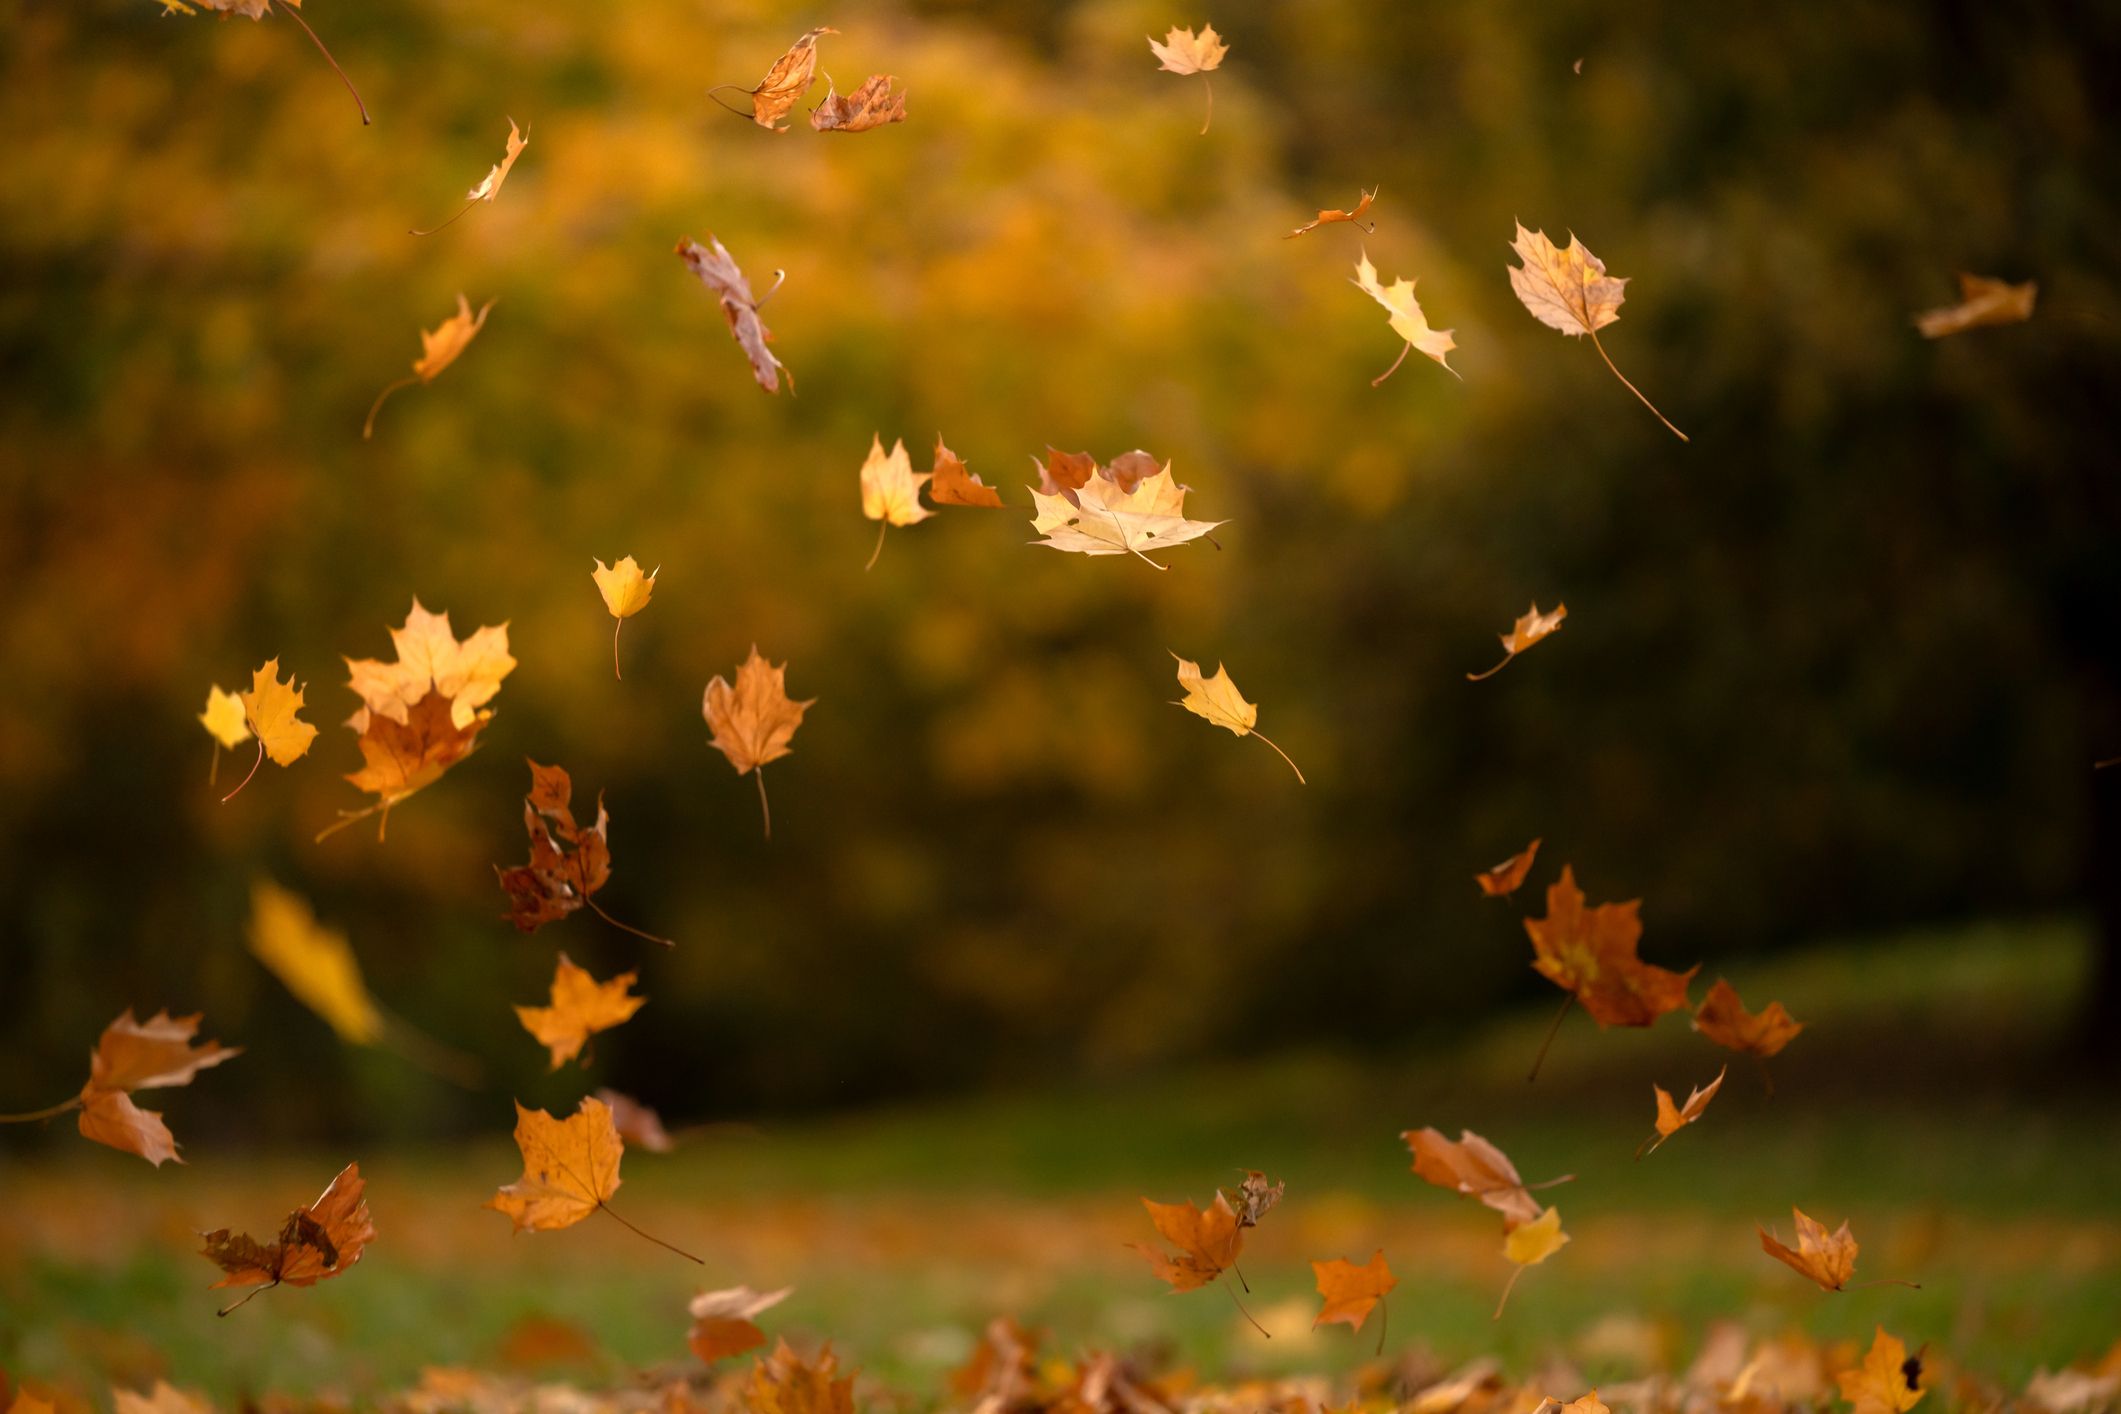 130 Best Fall Instagram Captions - Cute Autumn Caption Ideas